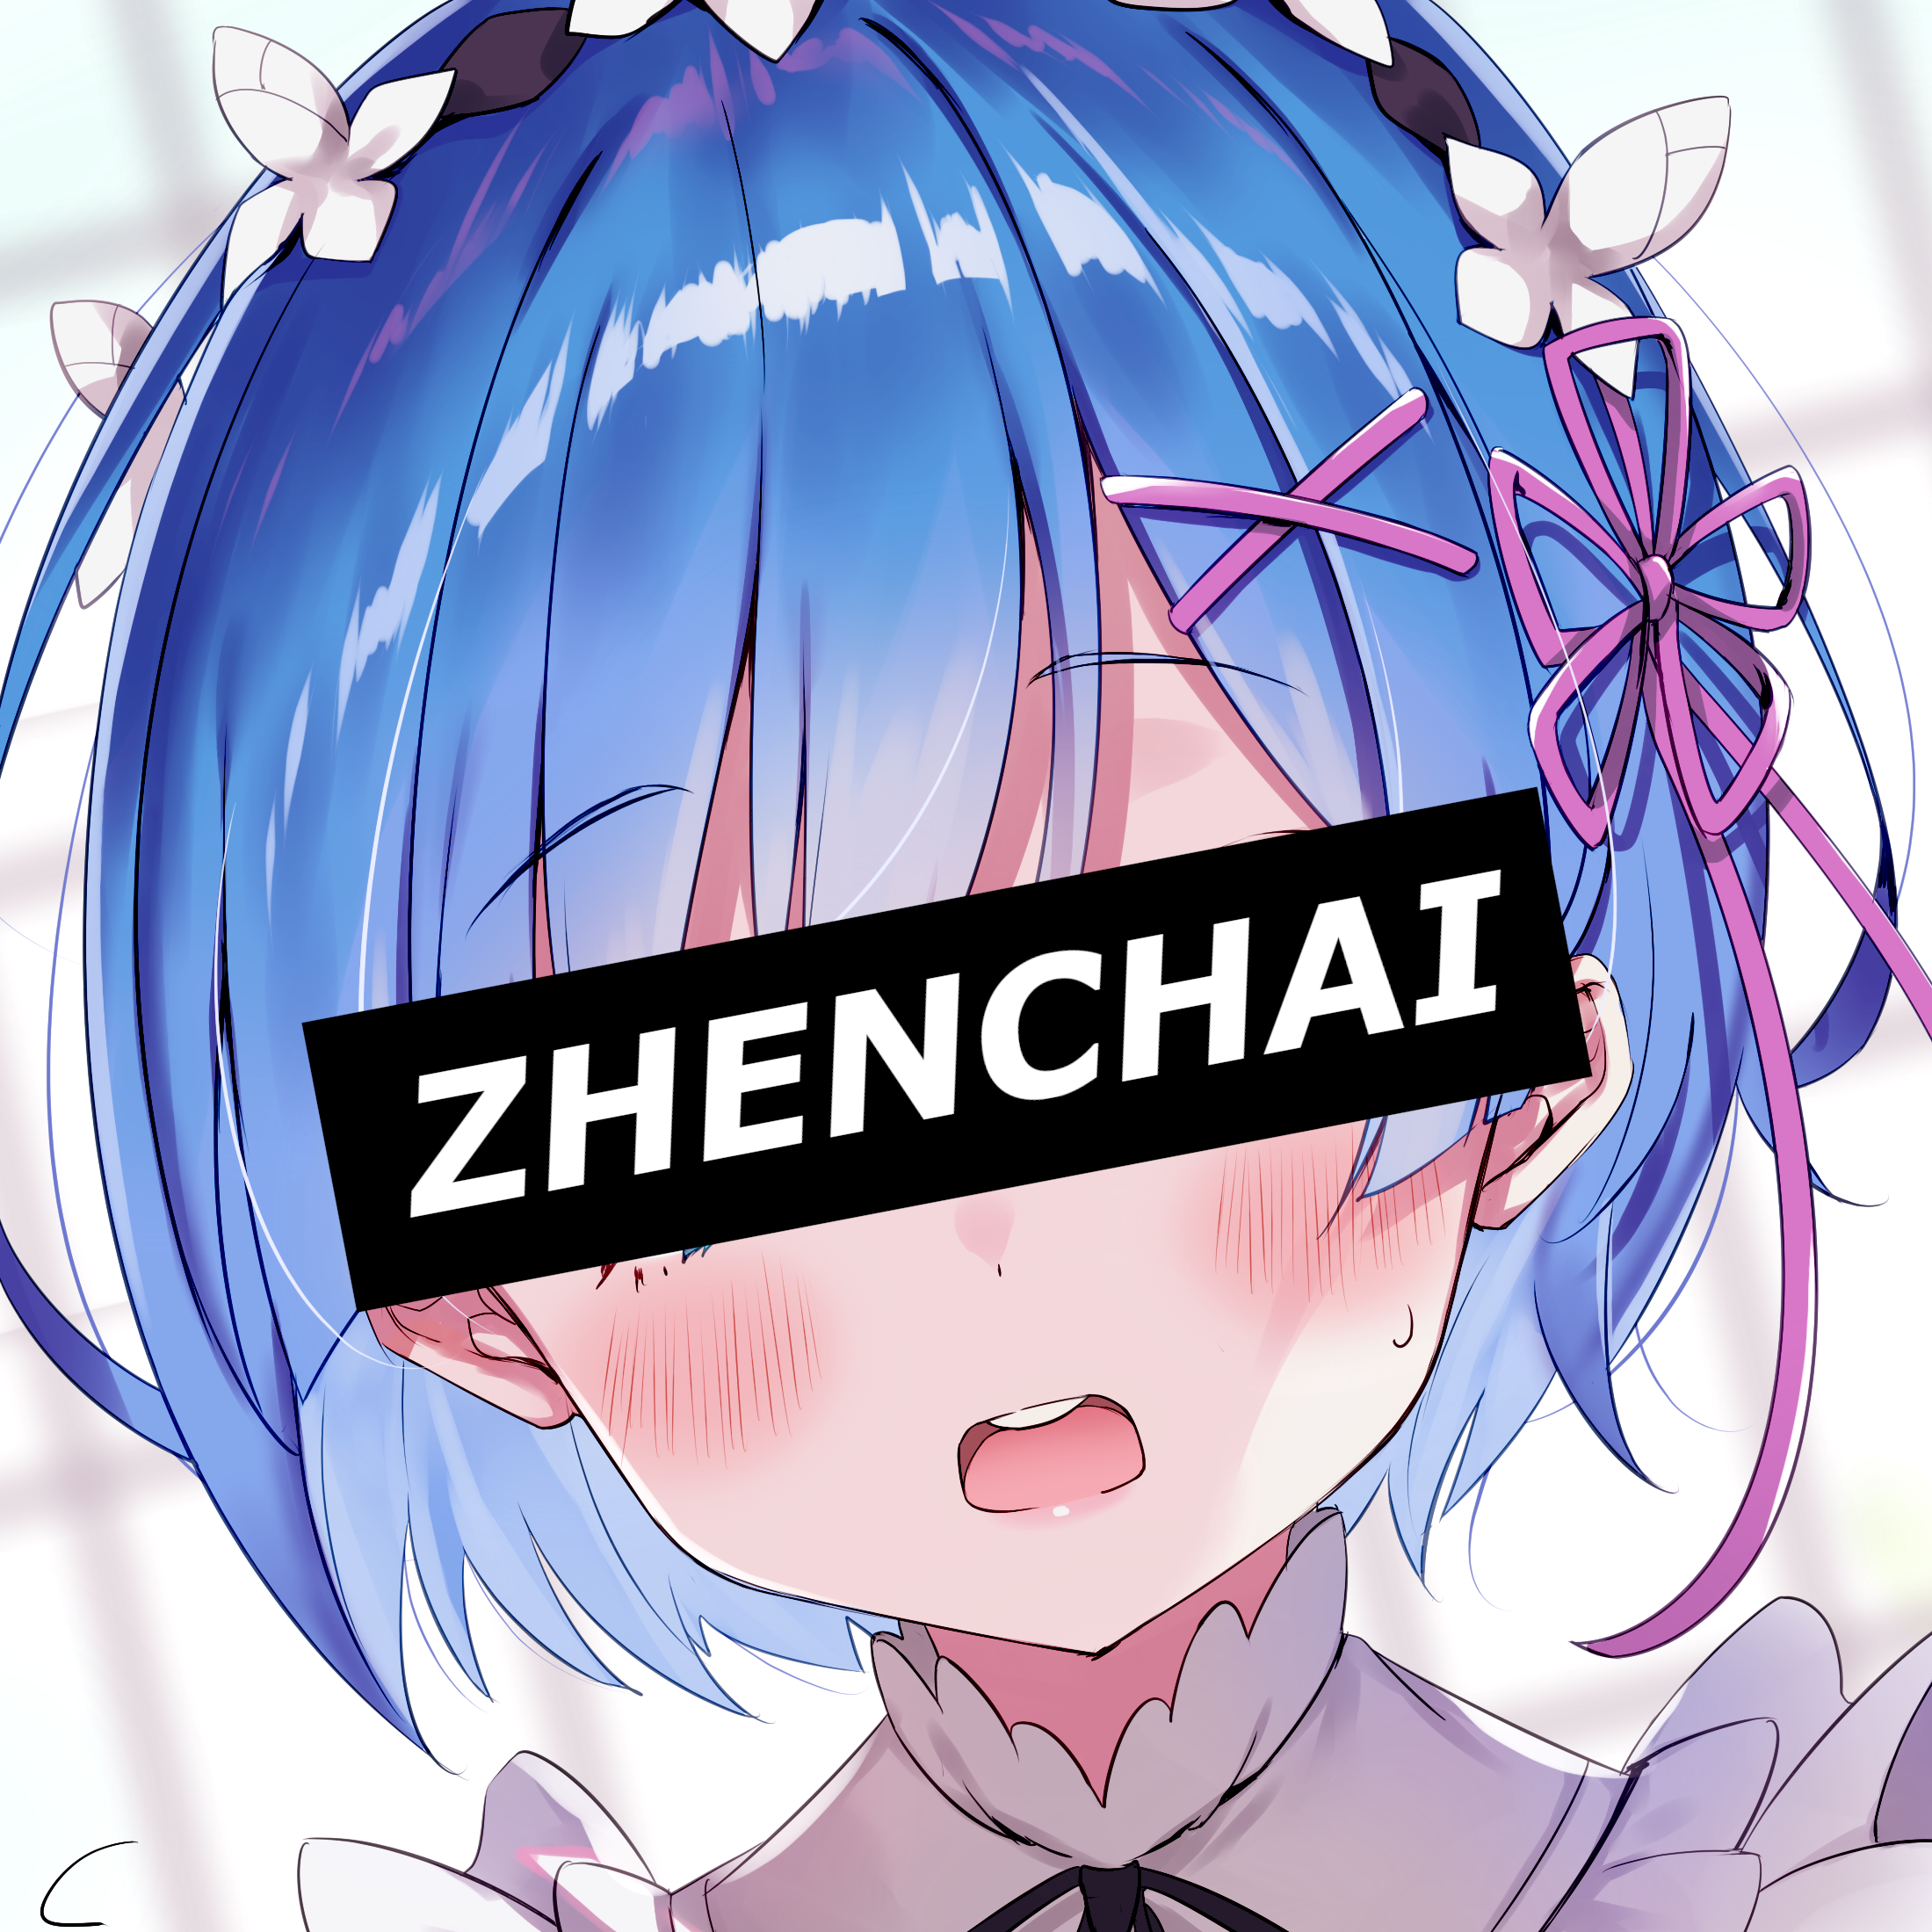 zhenchai profile pic